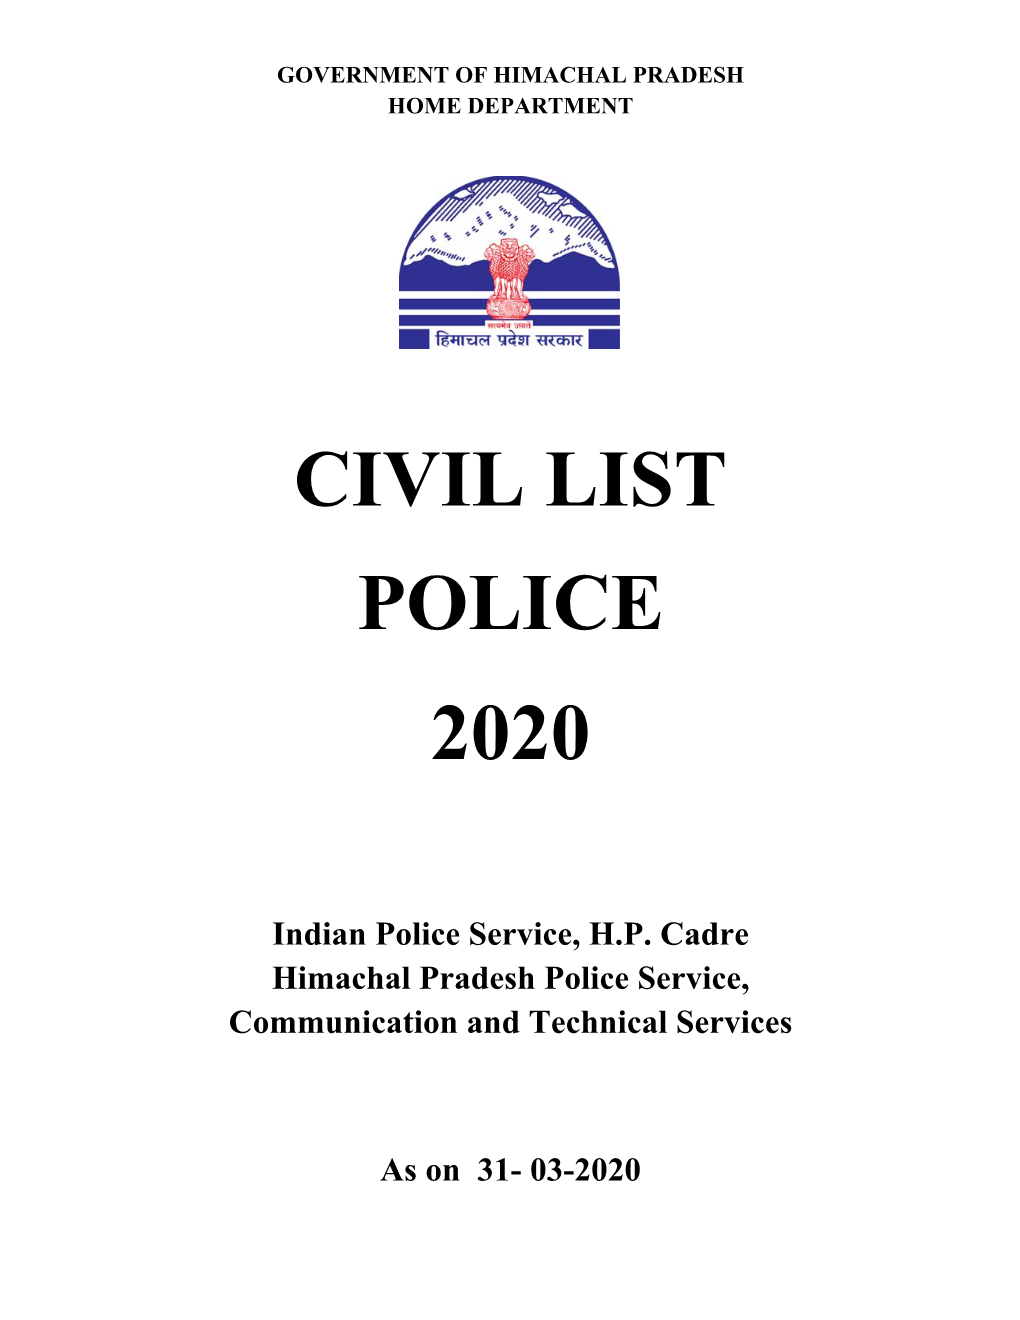 Civil List Police 2020